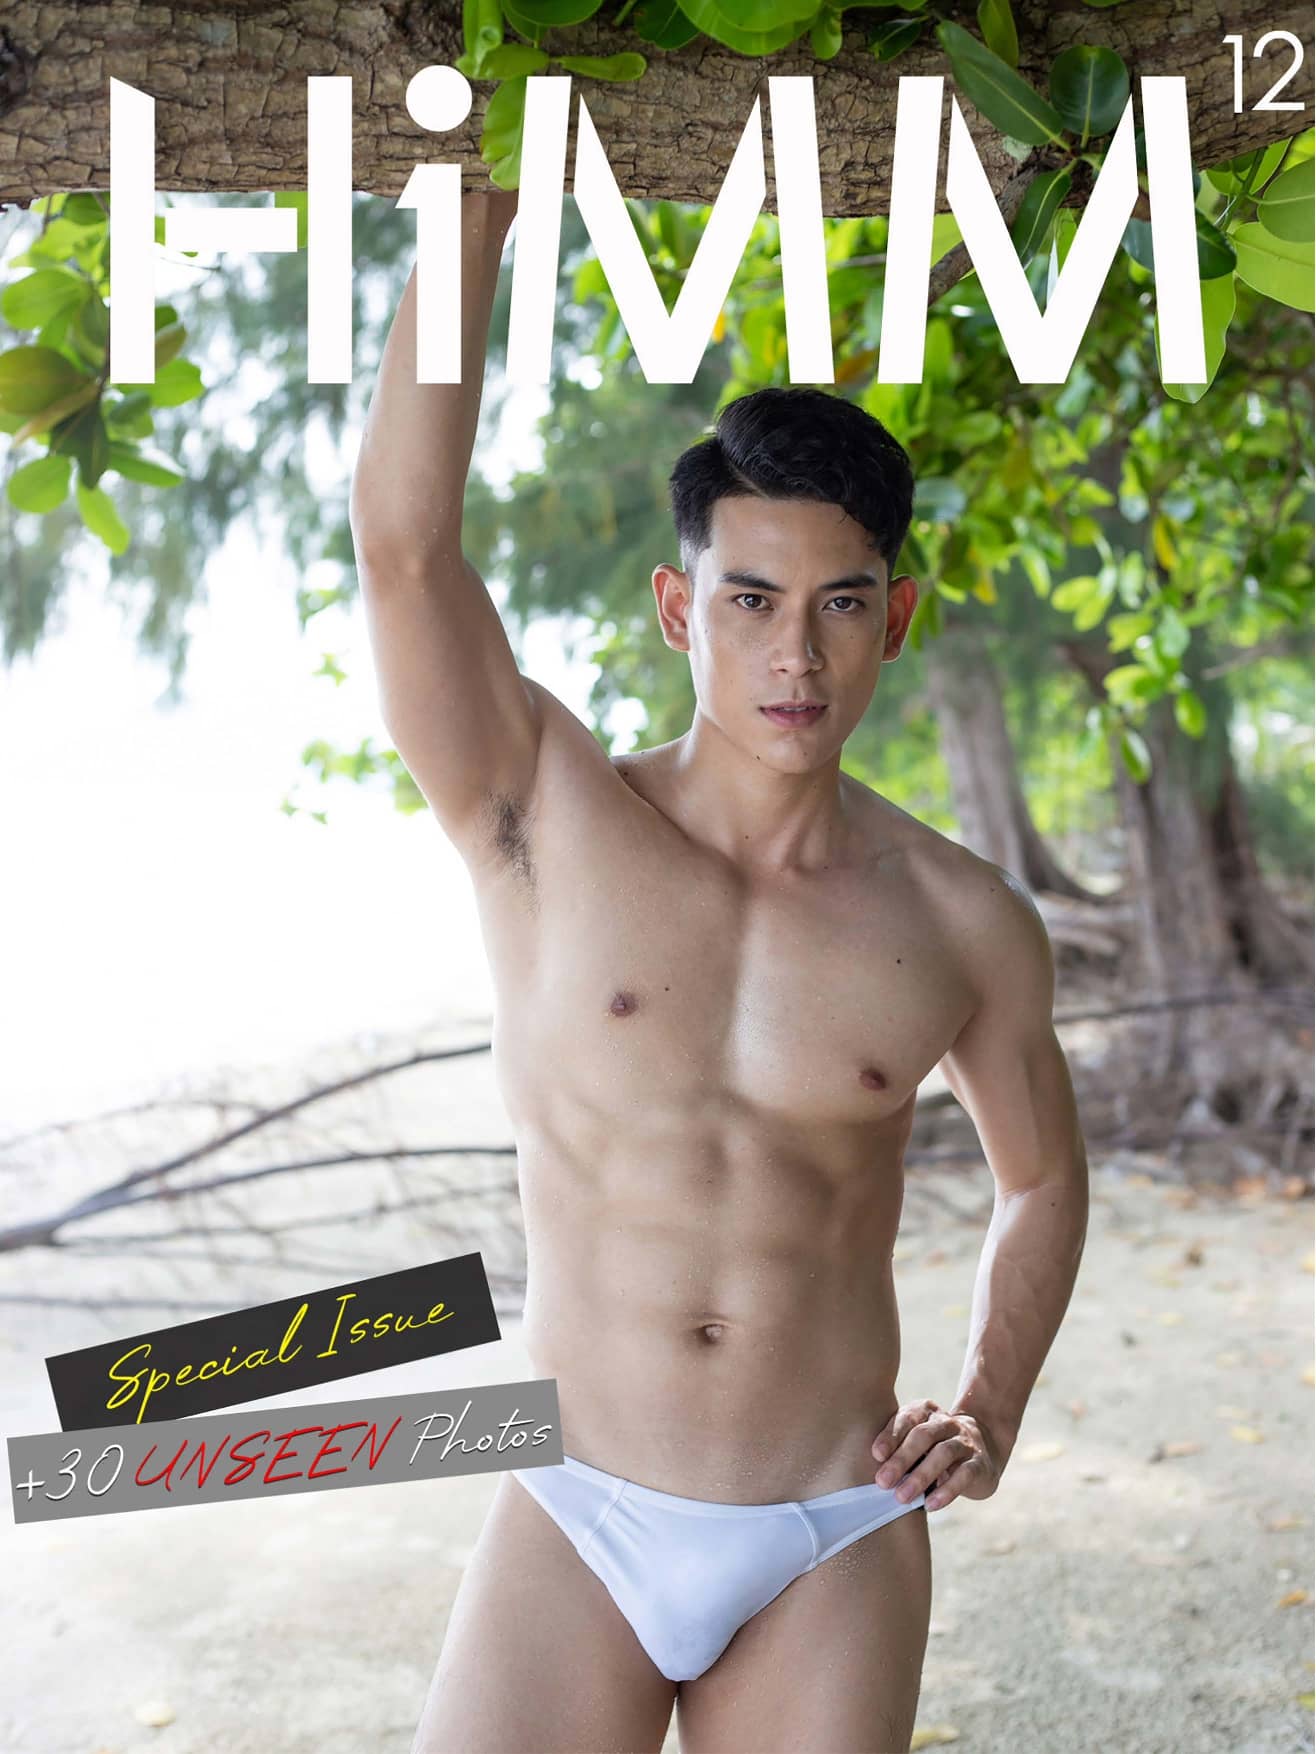 HiMM 12 Kitsana Chris Phitaksin HD Quality full version ‖ R+【PHOTO】